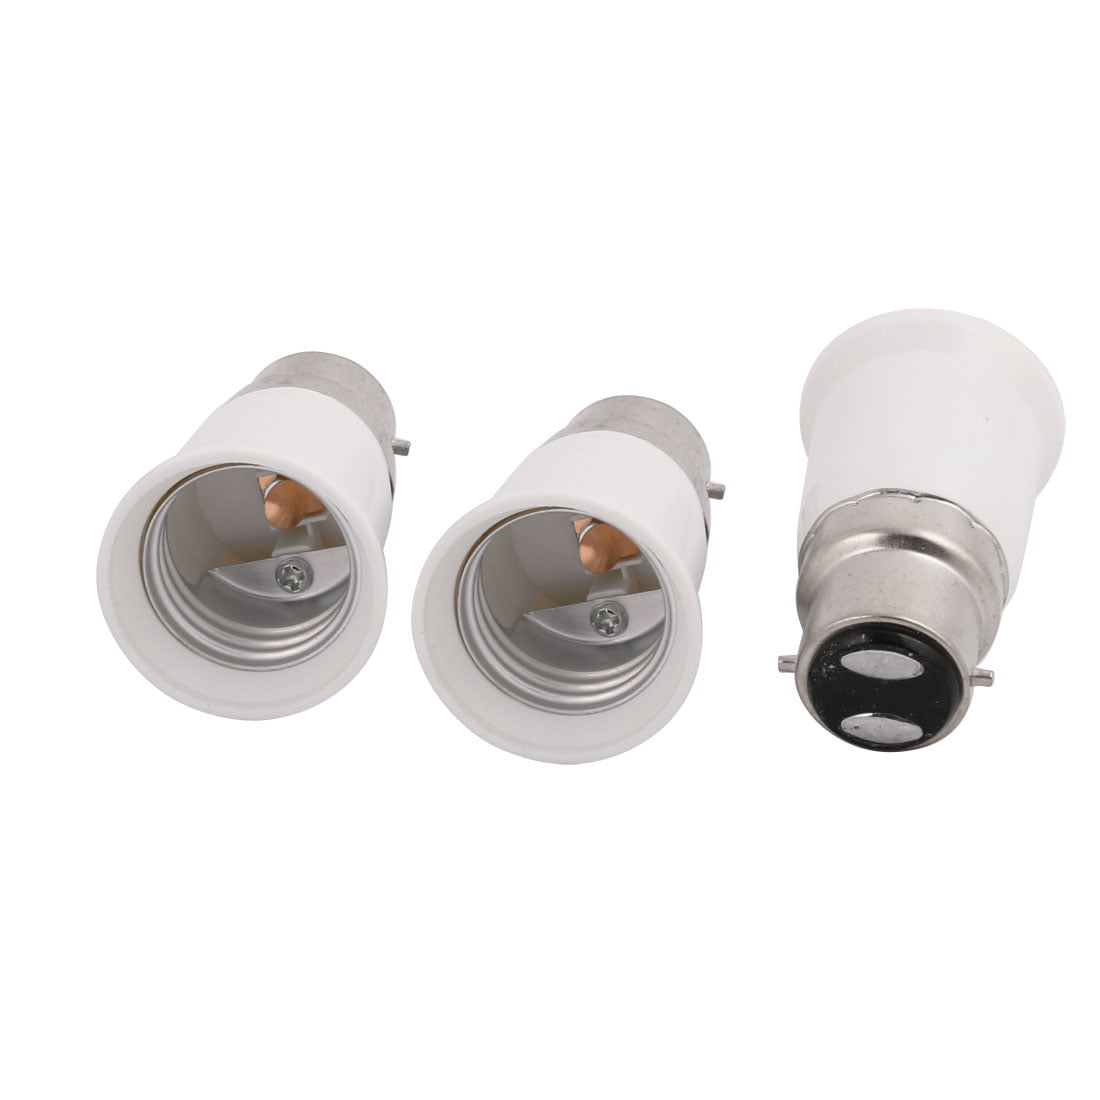 No Fire Hazard DZYDZR 10 pcs Bulb Holder B22 to E27 Adapter Converter Anti-burning Fits LED/CFL Light Bulbs Heat-resistant B22 Light Socket to E26 Light Bulb Base Socket